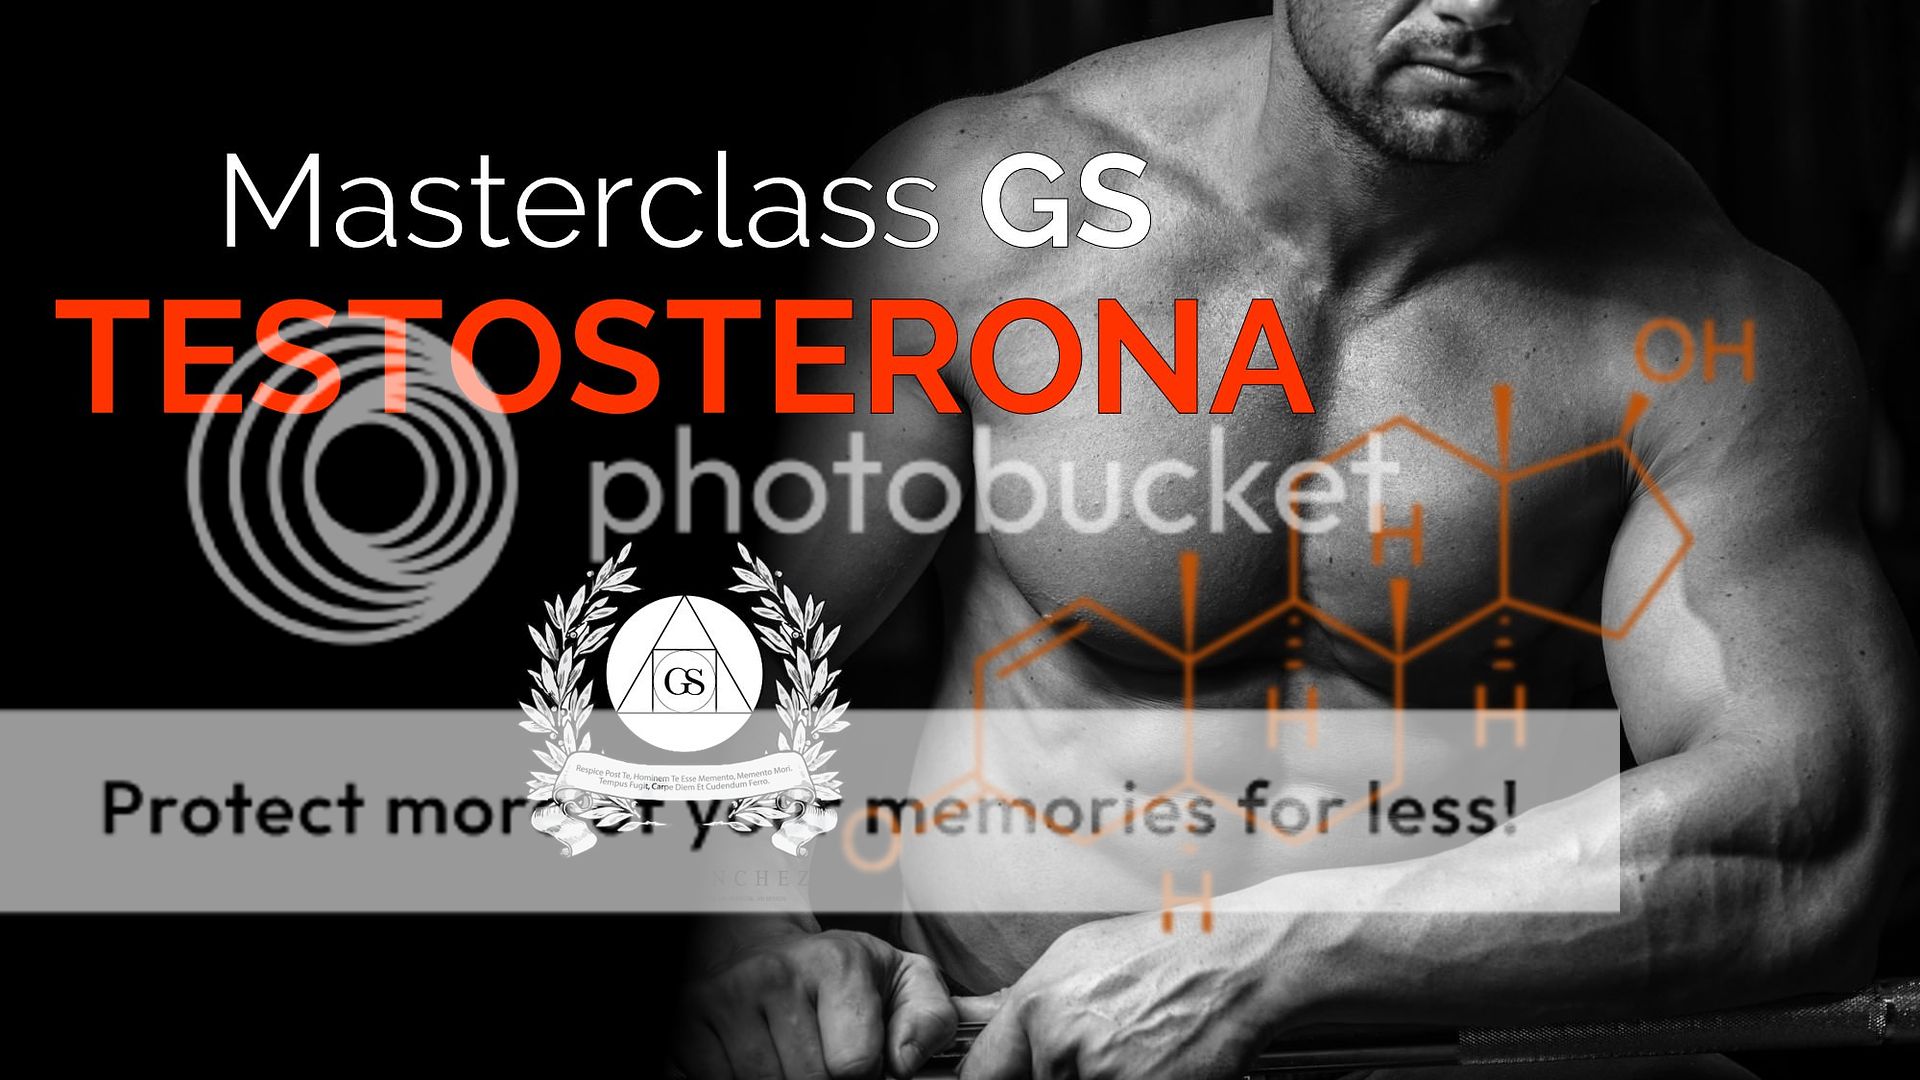 fuoxd42 - Masterclass: Testosterona